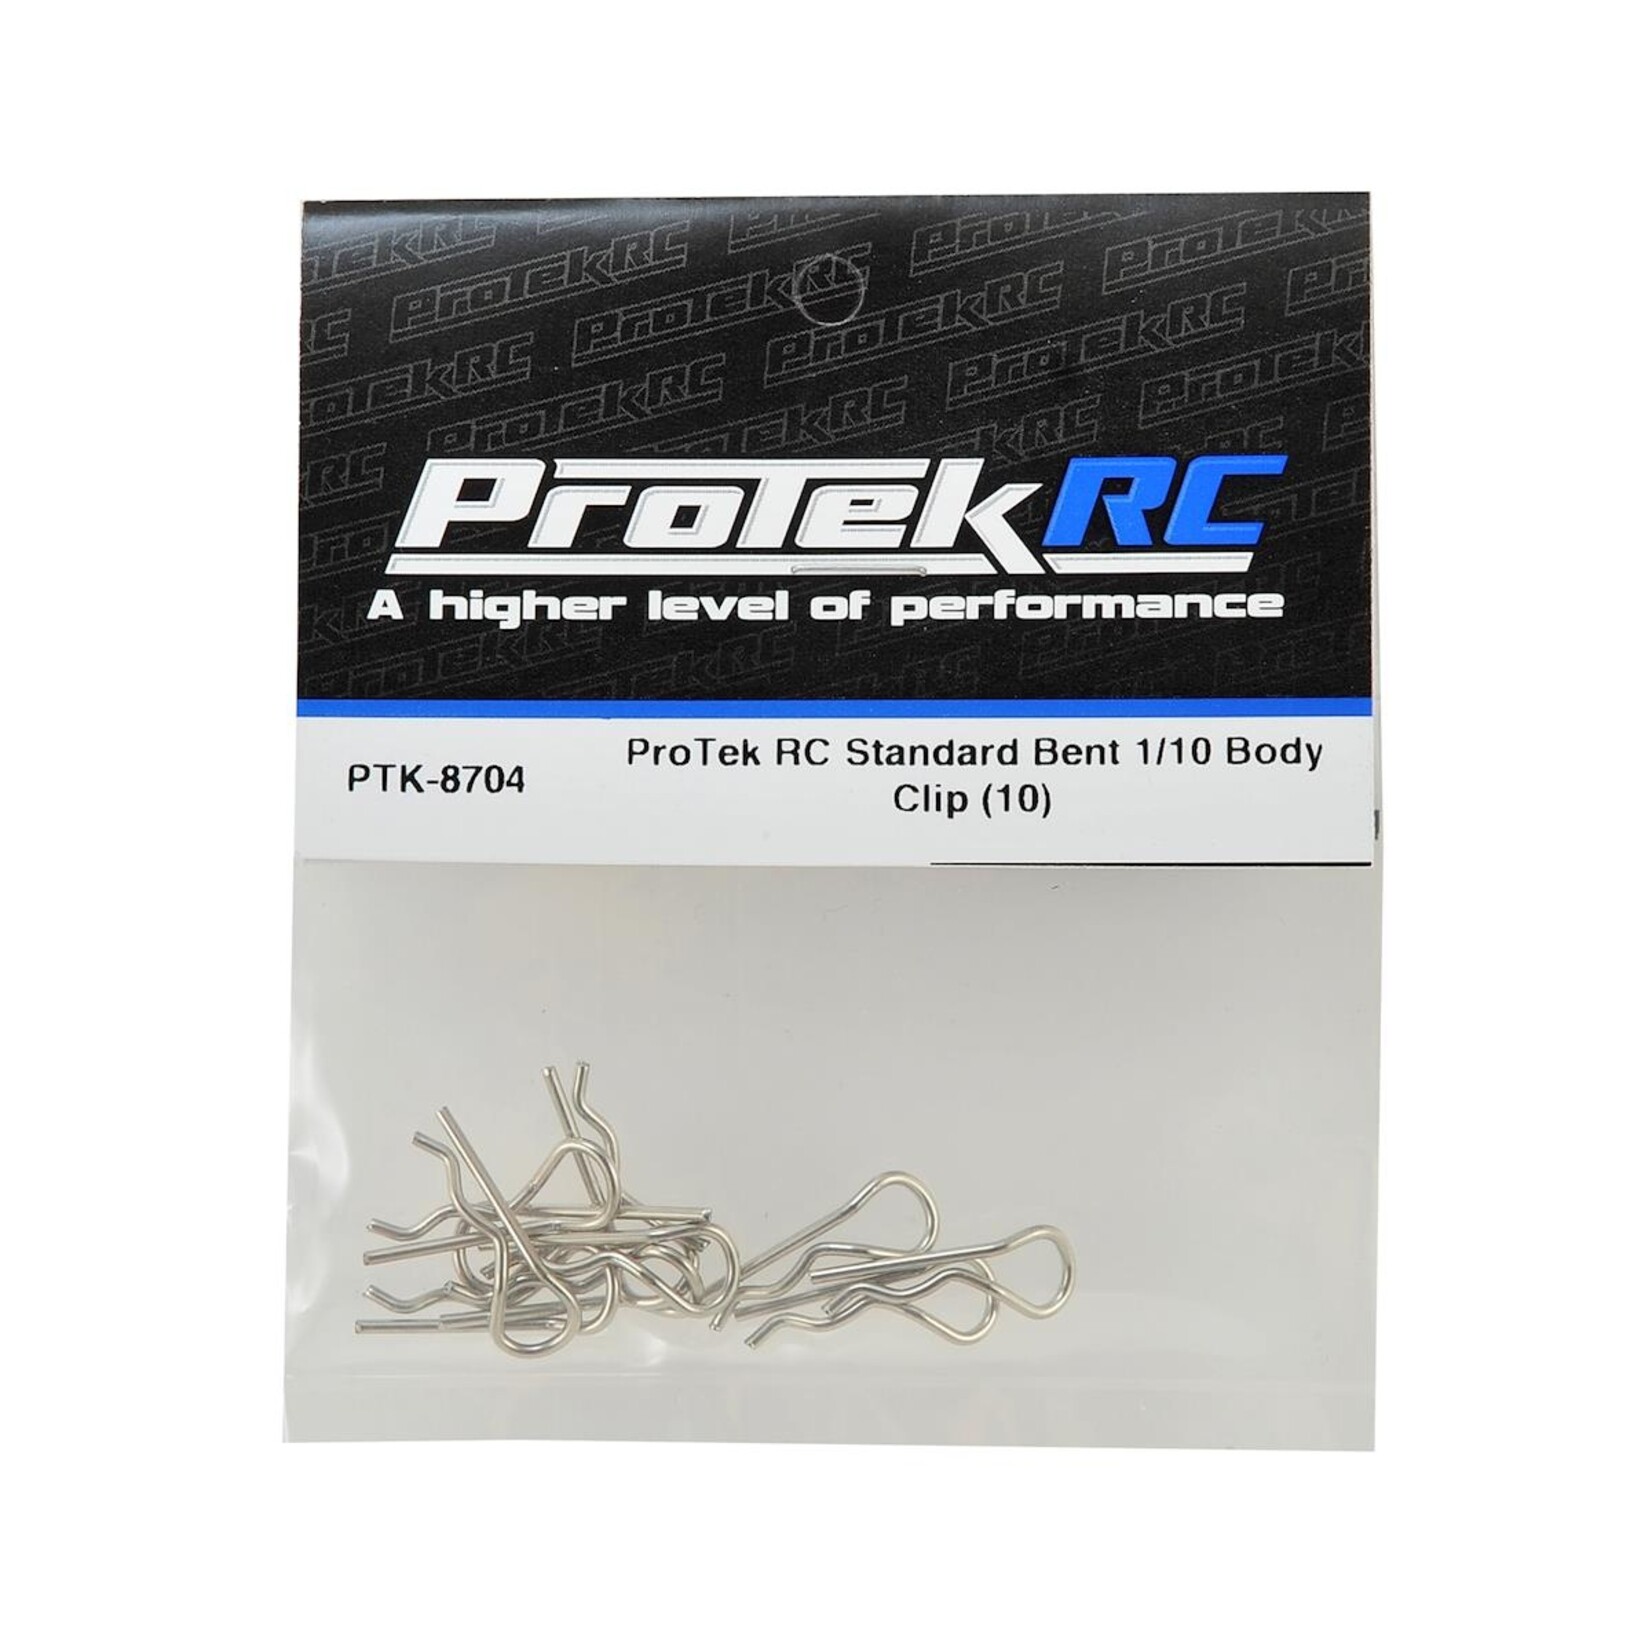 ProTek RC ProTek RC Standard Bent Body Clip (10) (1/10 Scale) #PTK-8704